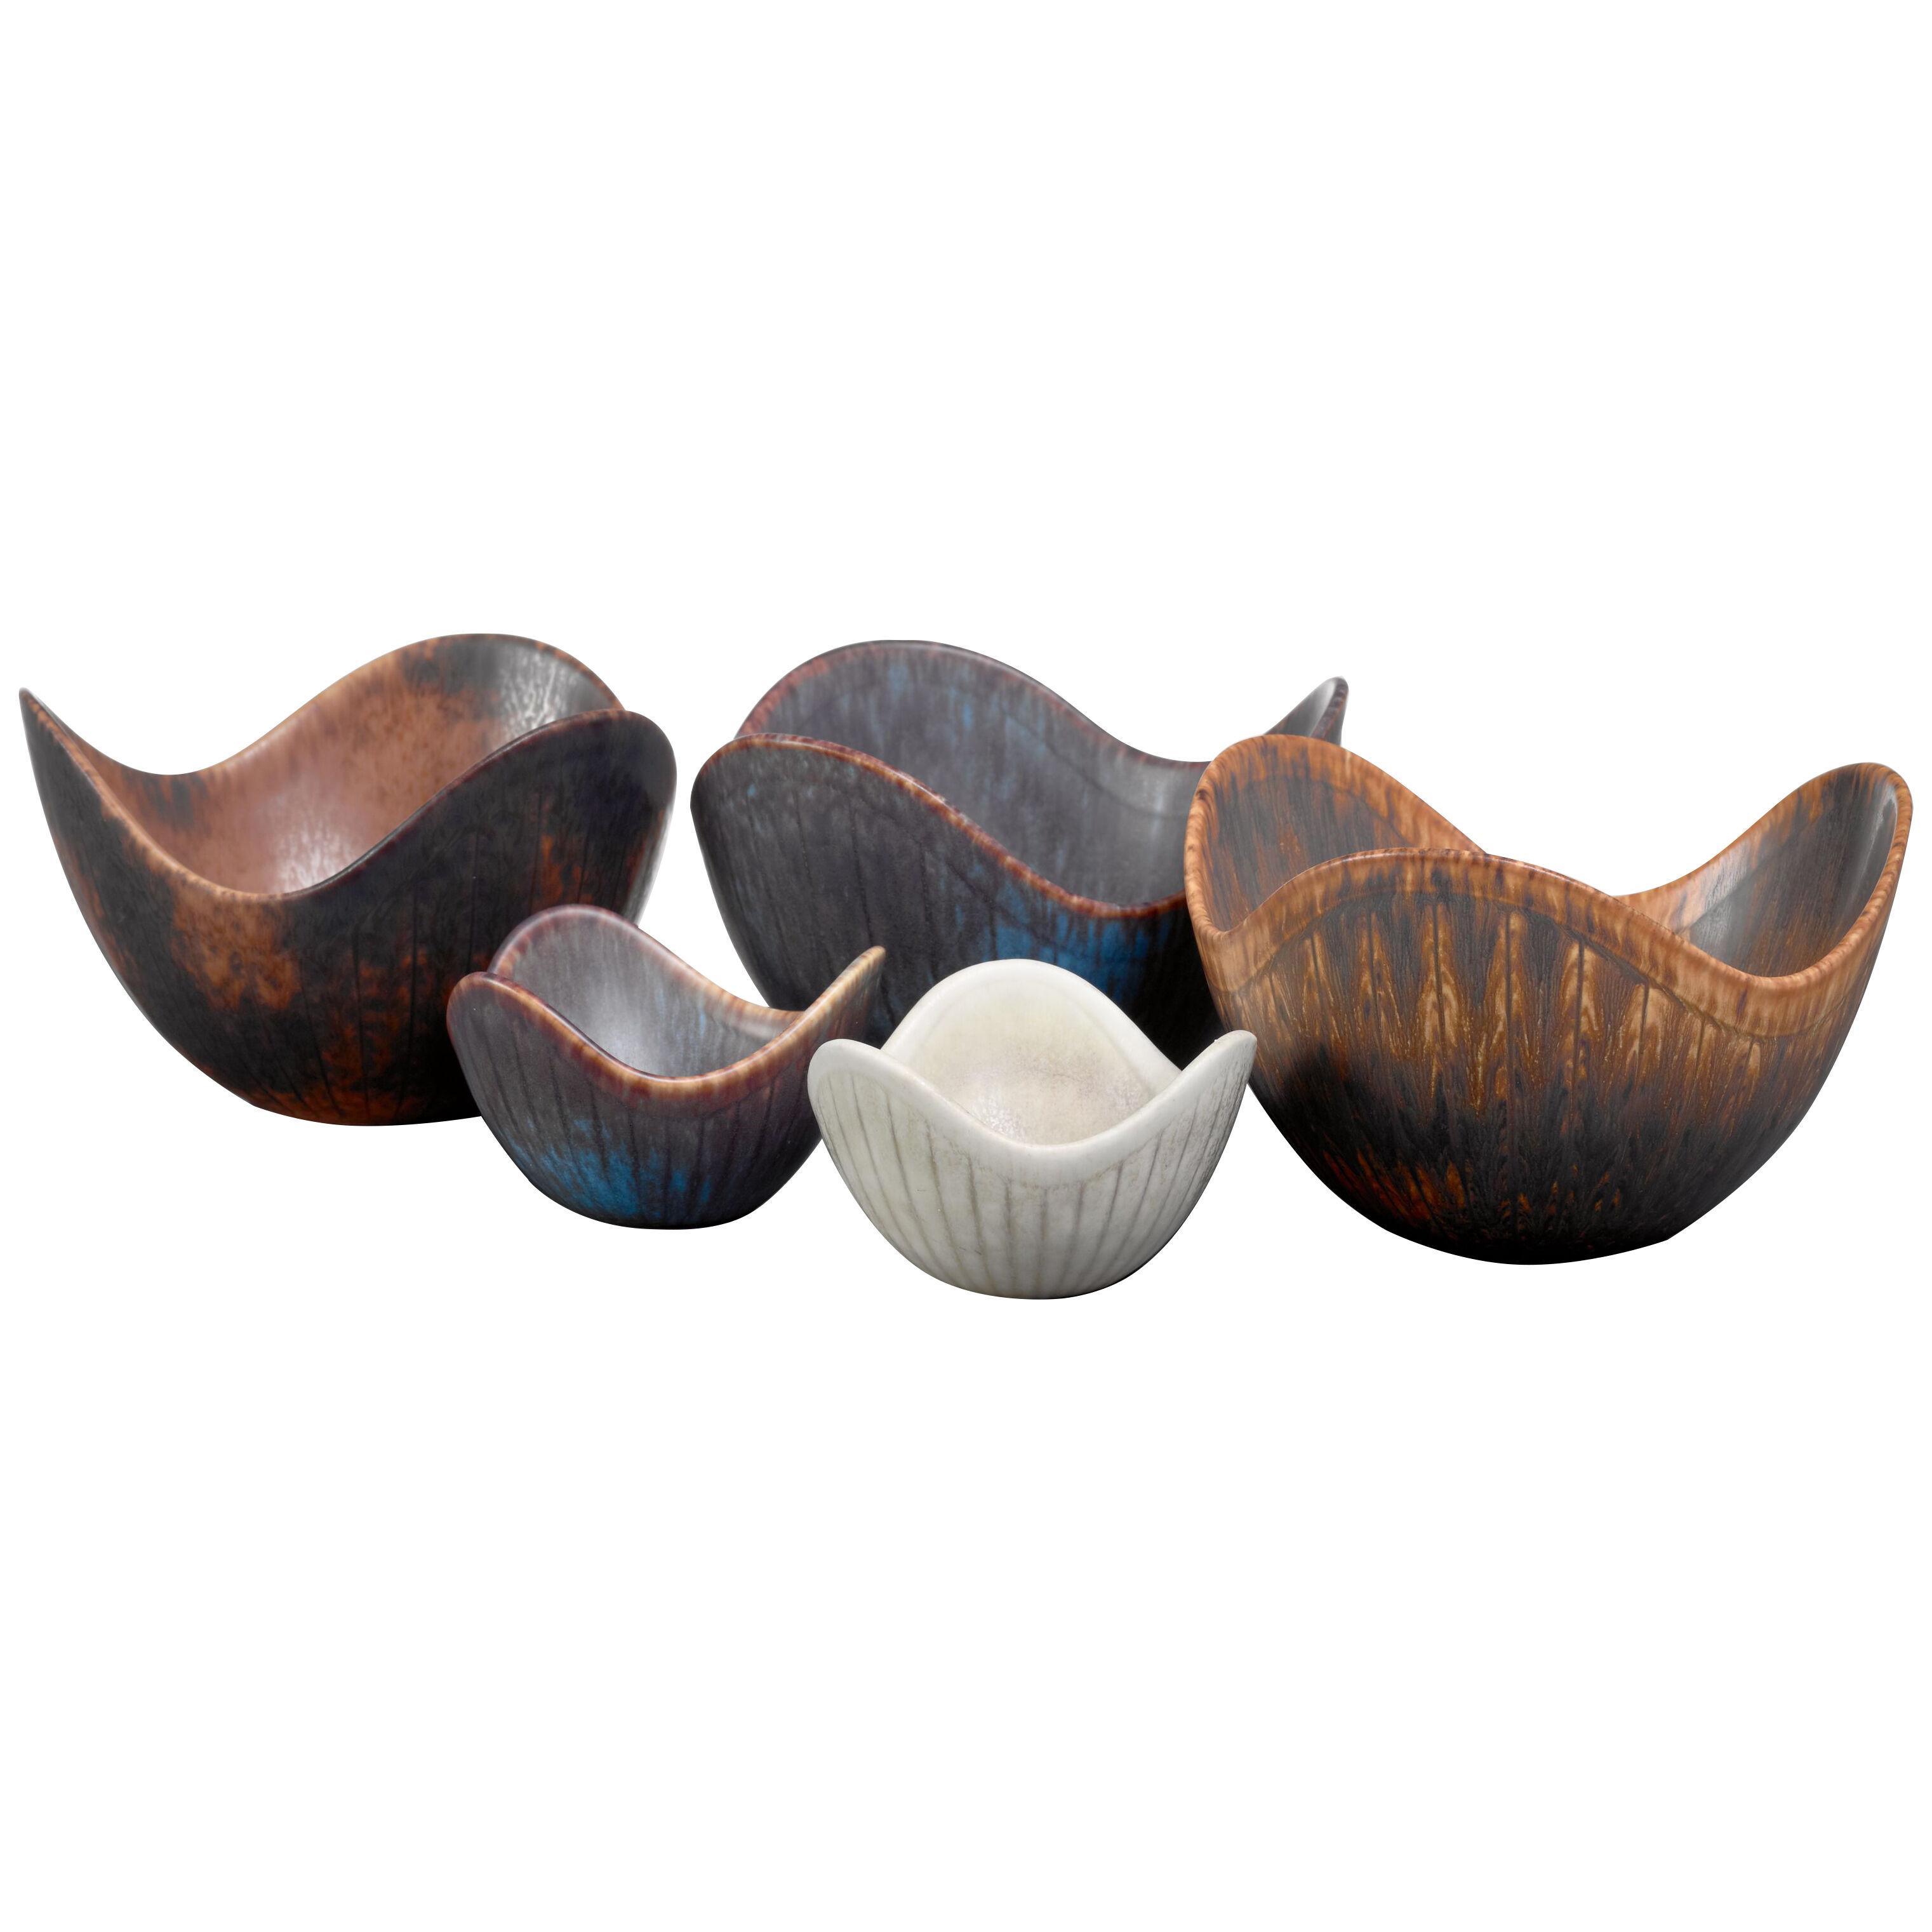 Gunnar Nylund set of five ceramic bowls, Sweden